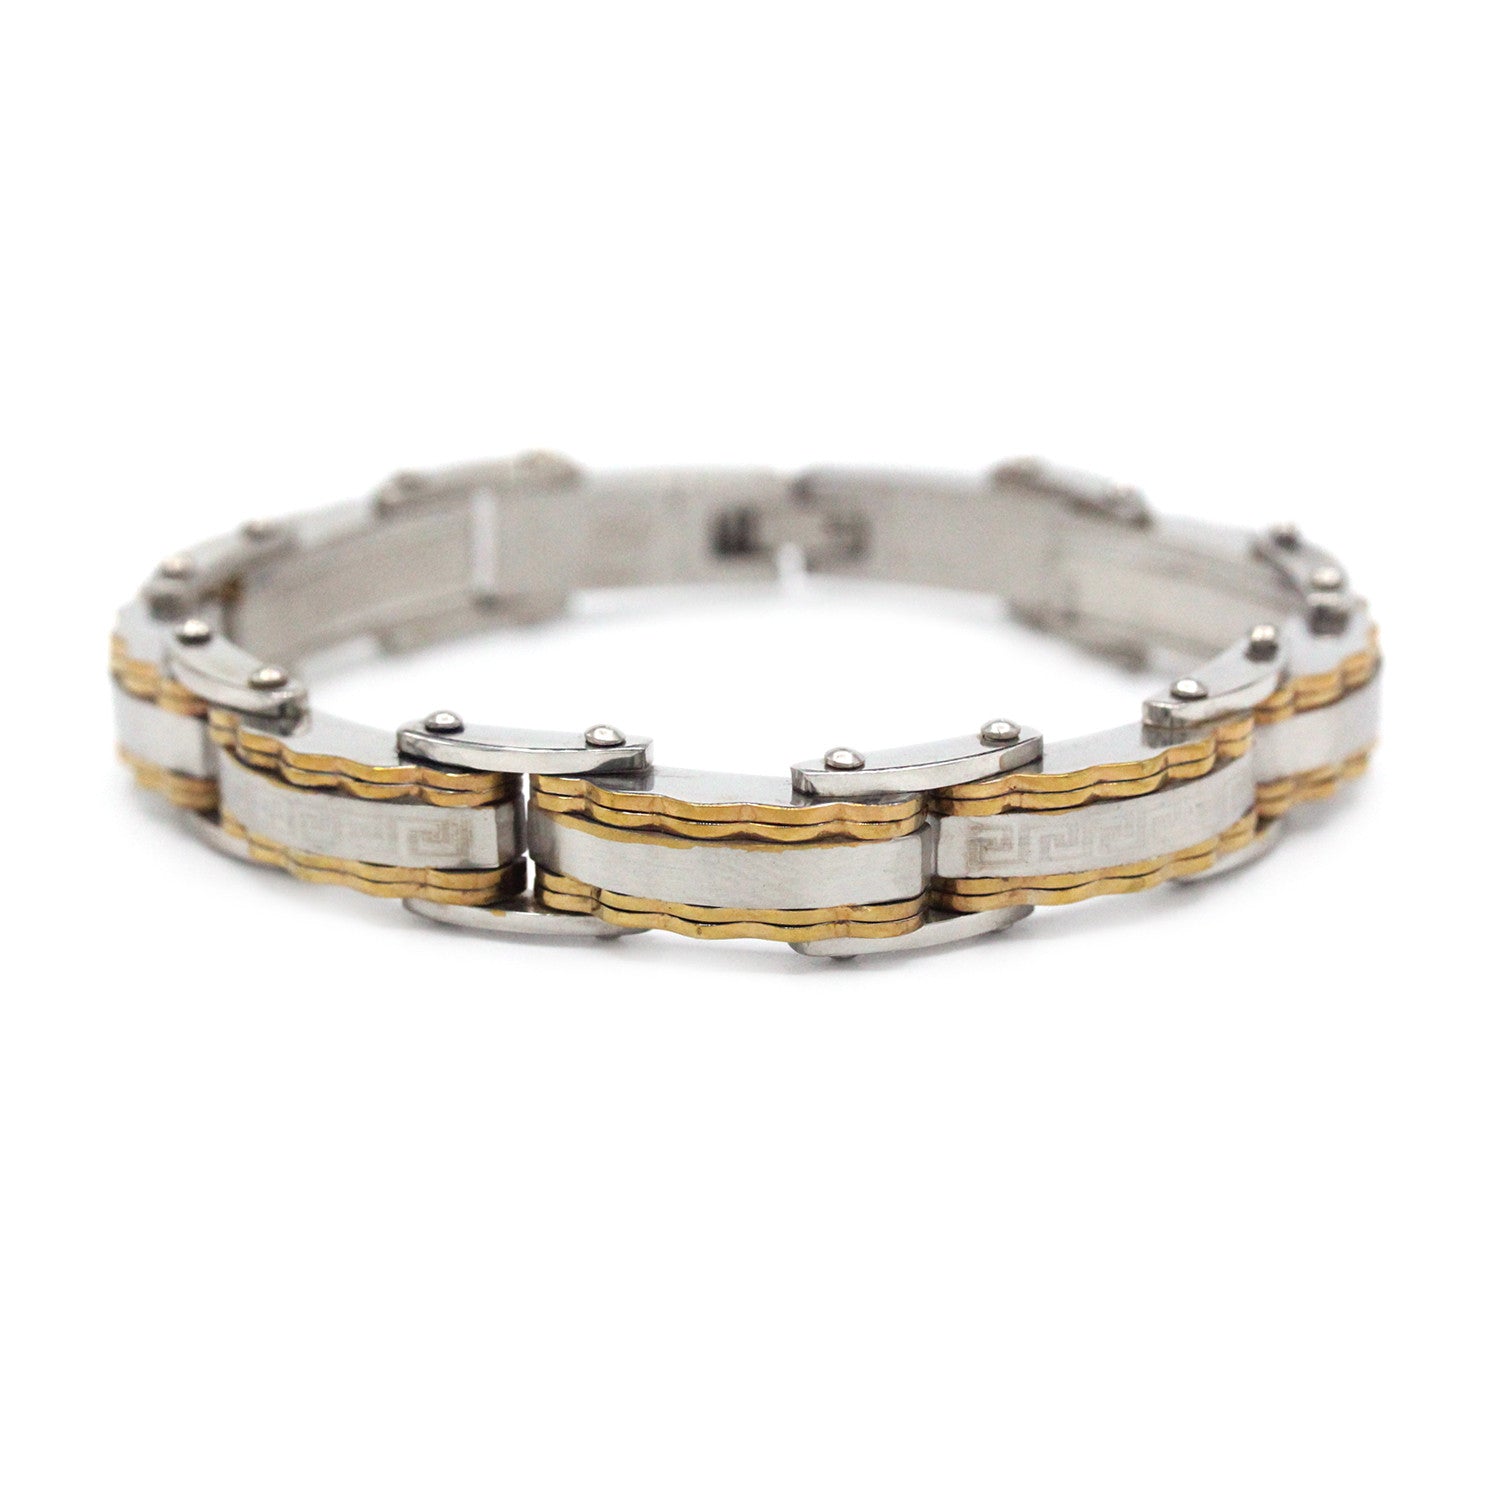 Decorative Men’s Stainless Steel Bracelet Fashion Wrist Band (Silver/Gold)